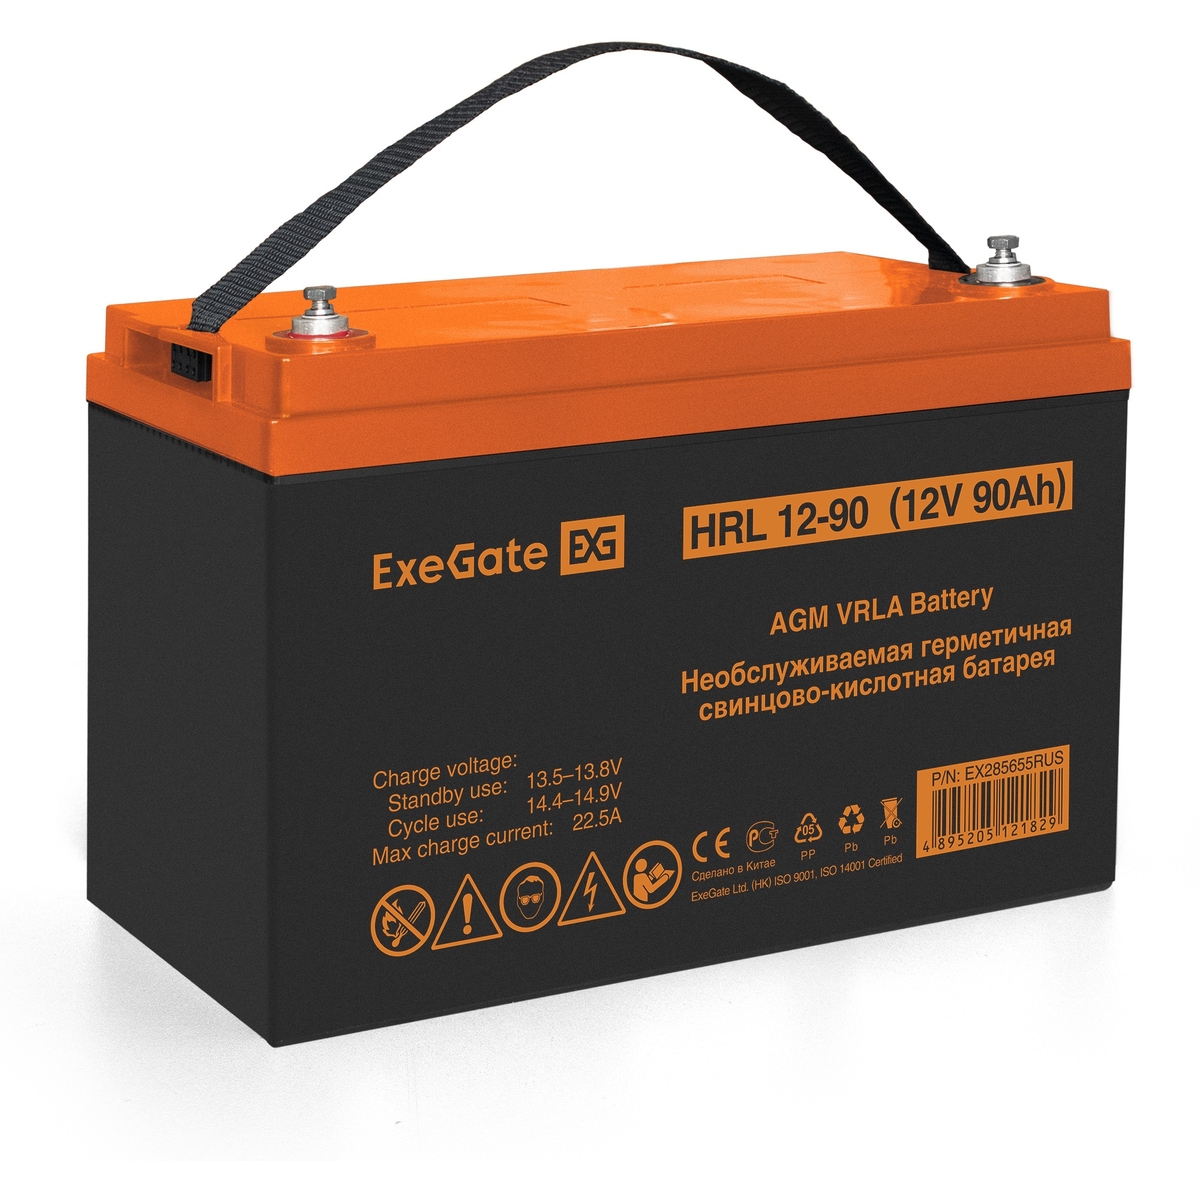 UPS set EX295997 + battery 90Ah EX285655 1 piece